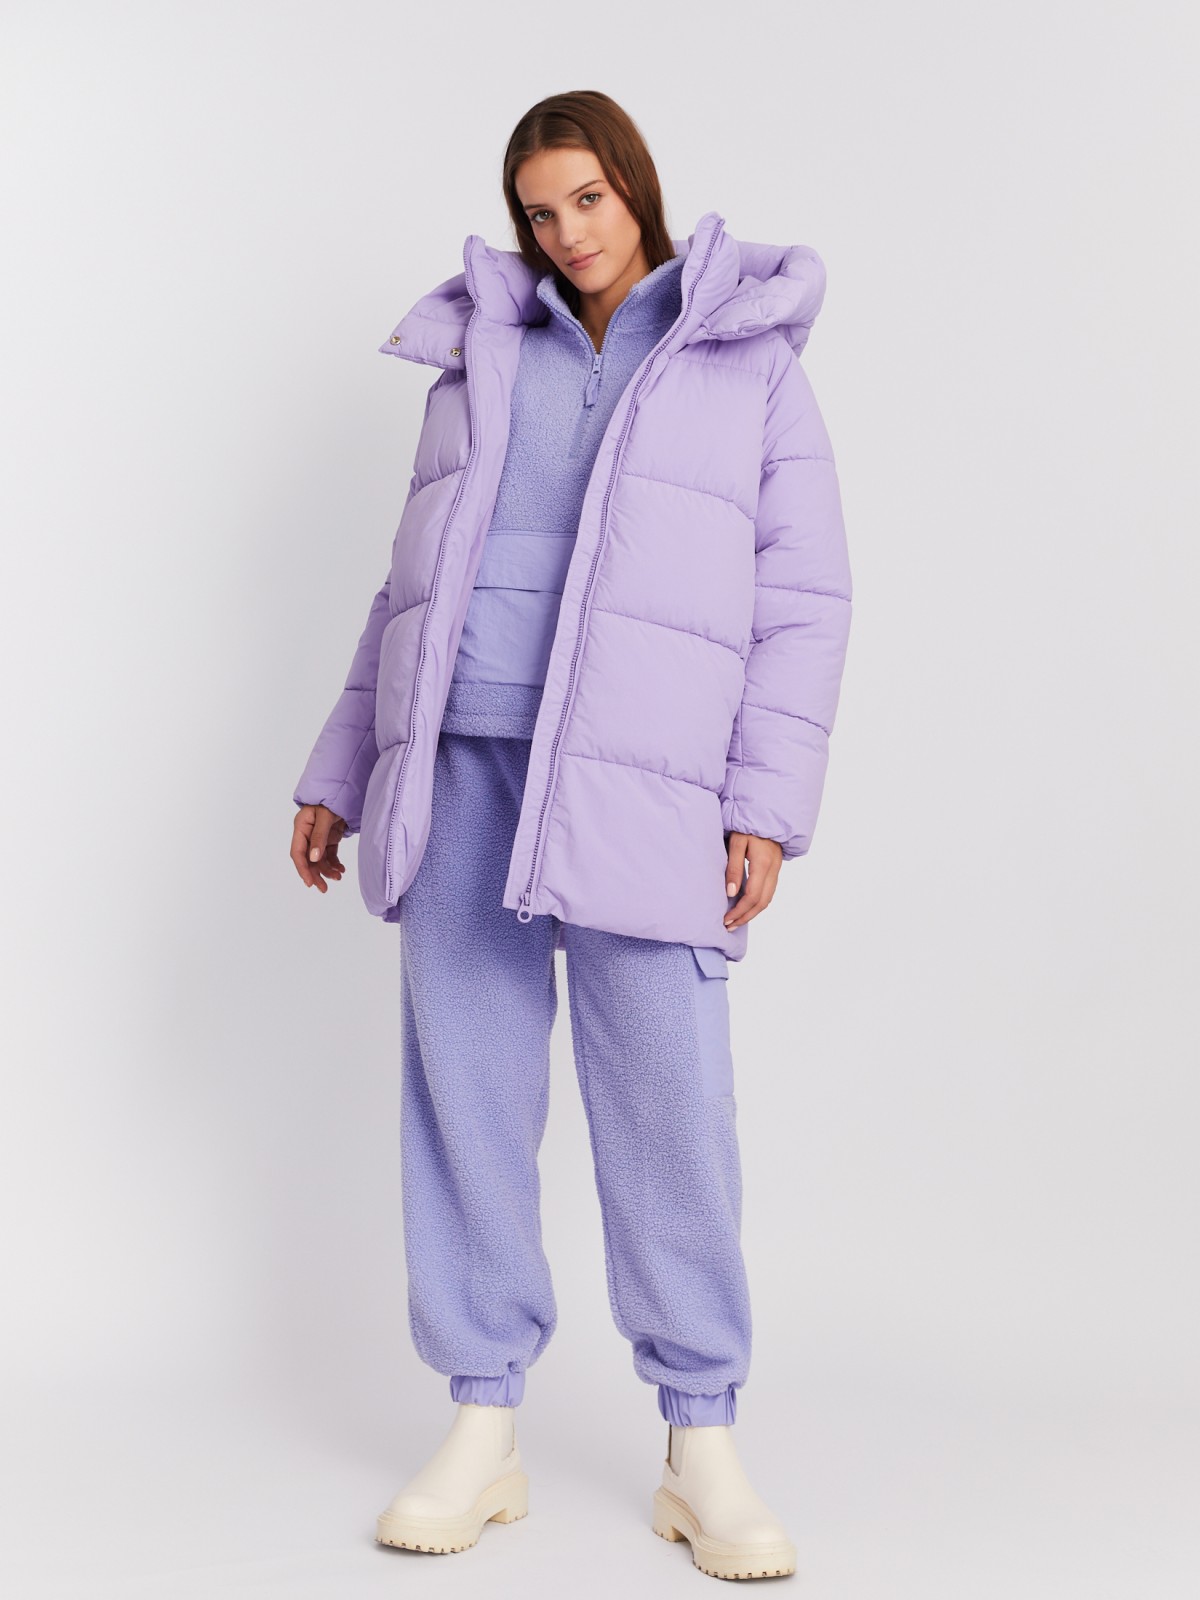 Тёплая куртка-пальто оверсайз силуэта с капюшоном zolla 02342520L054, цвет фиолетовый, размер S - фото 2